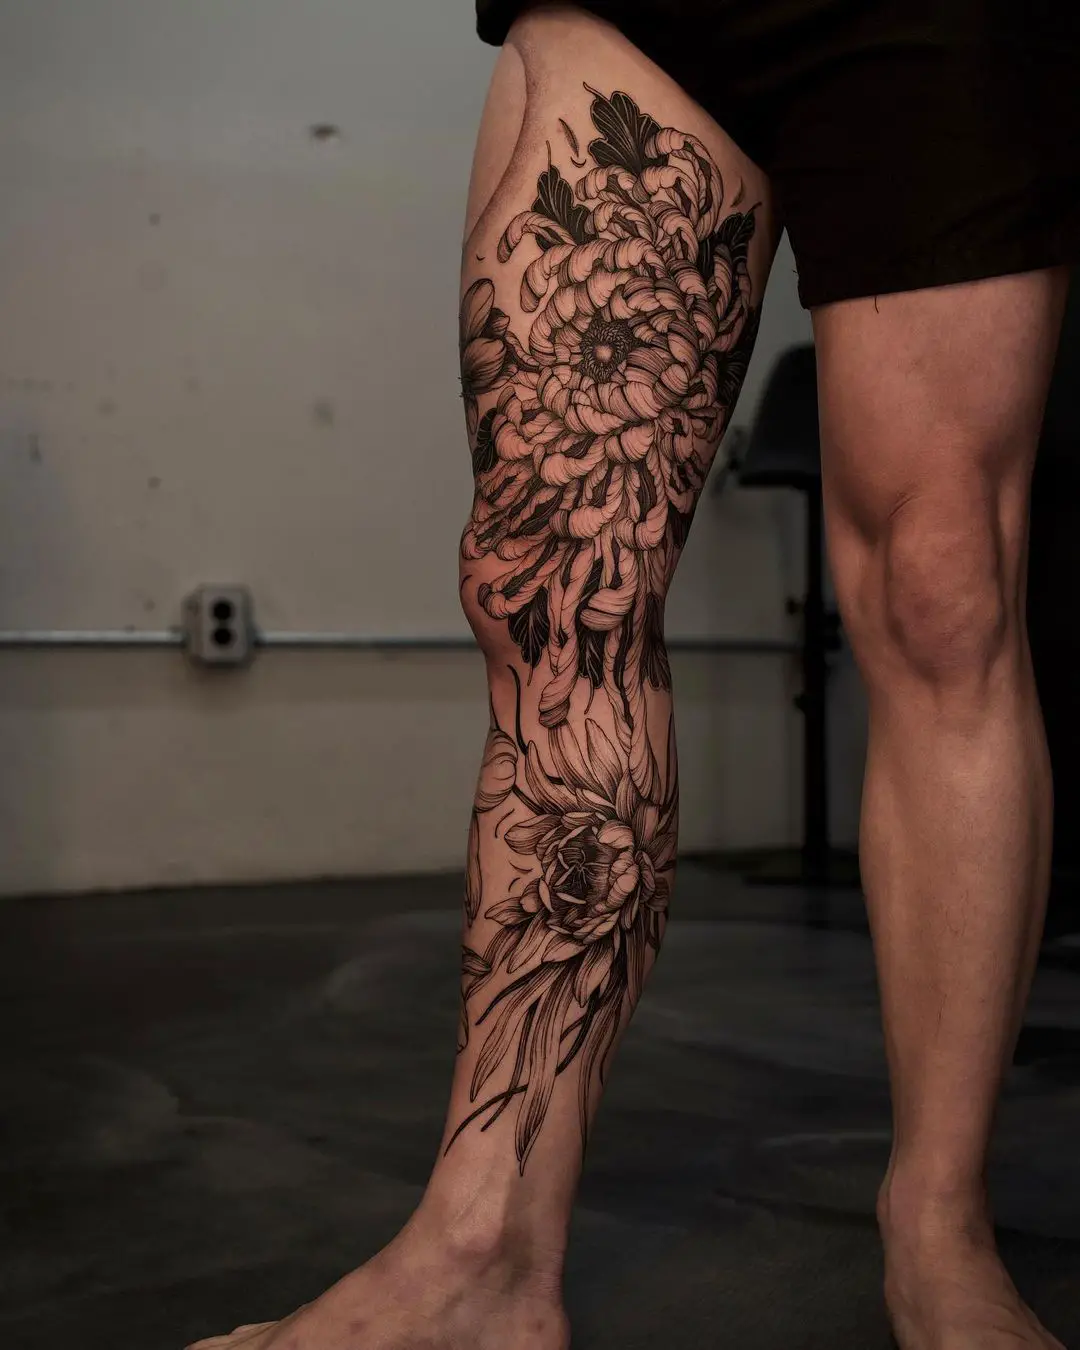 Leg tattoo ideas for men by zittenofart